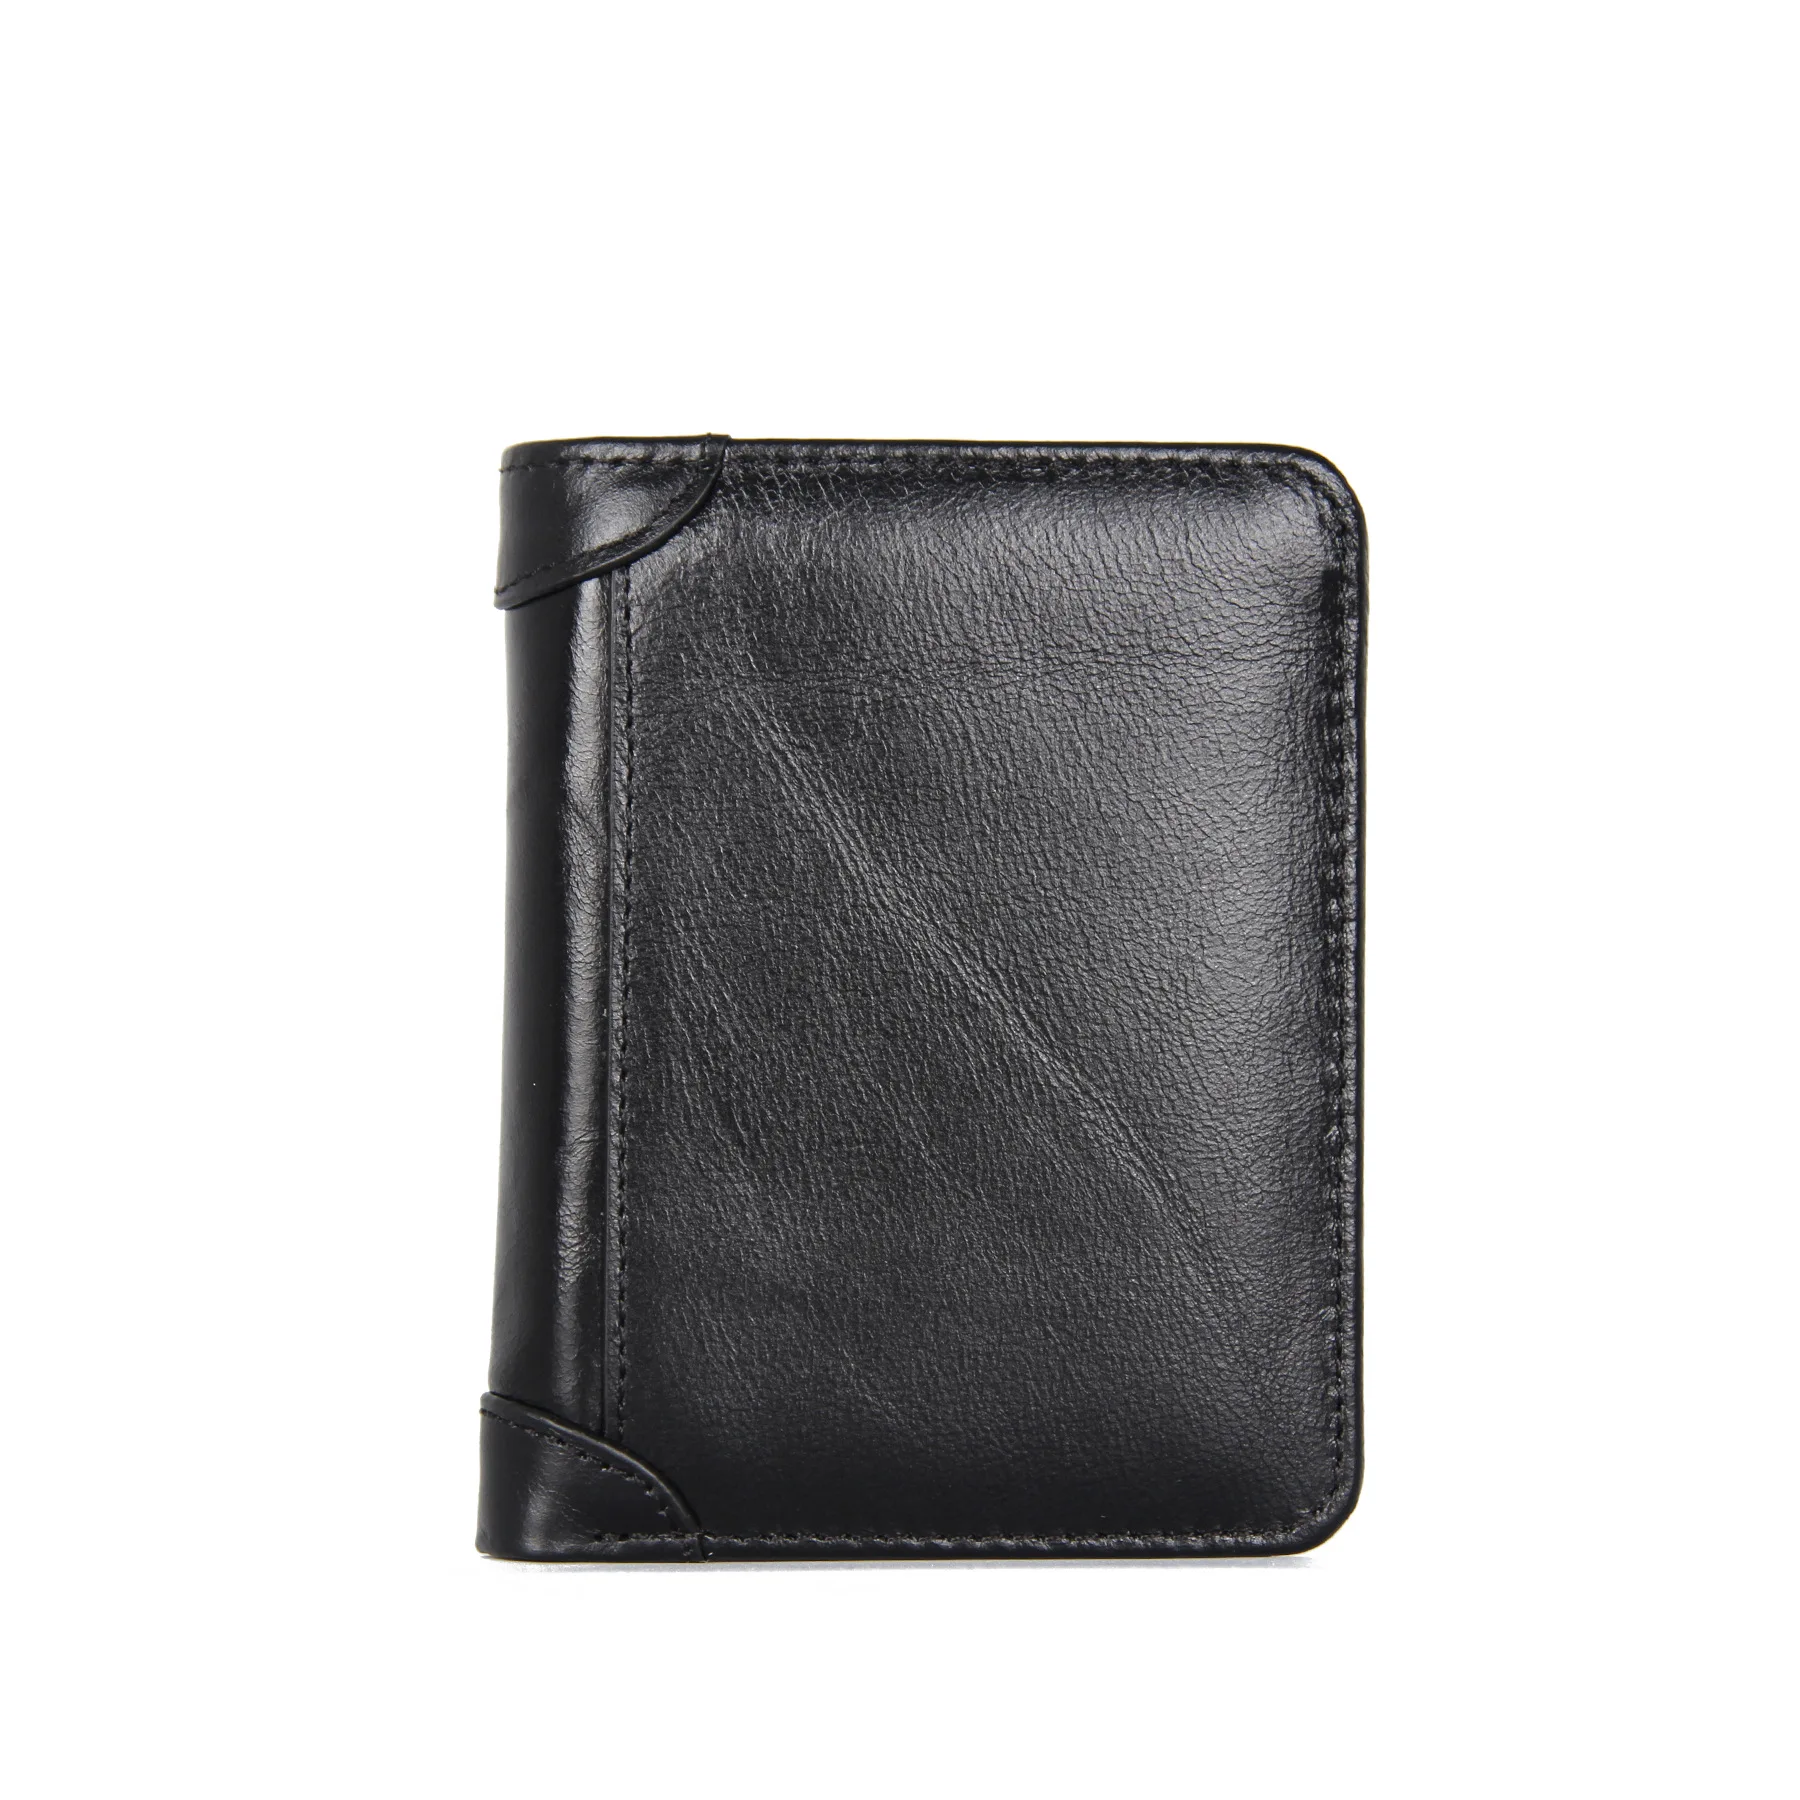 2021 new fashion classic wallet, fashion classic coin purse, fashion classic card holder